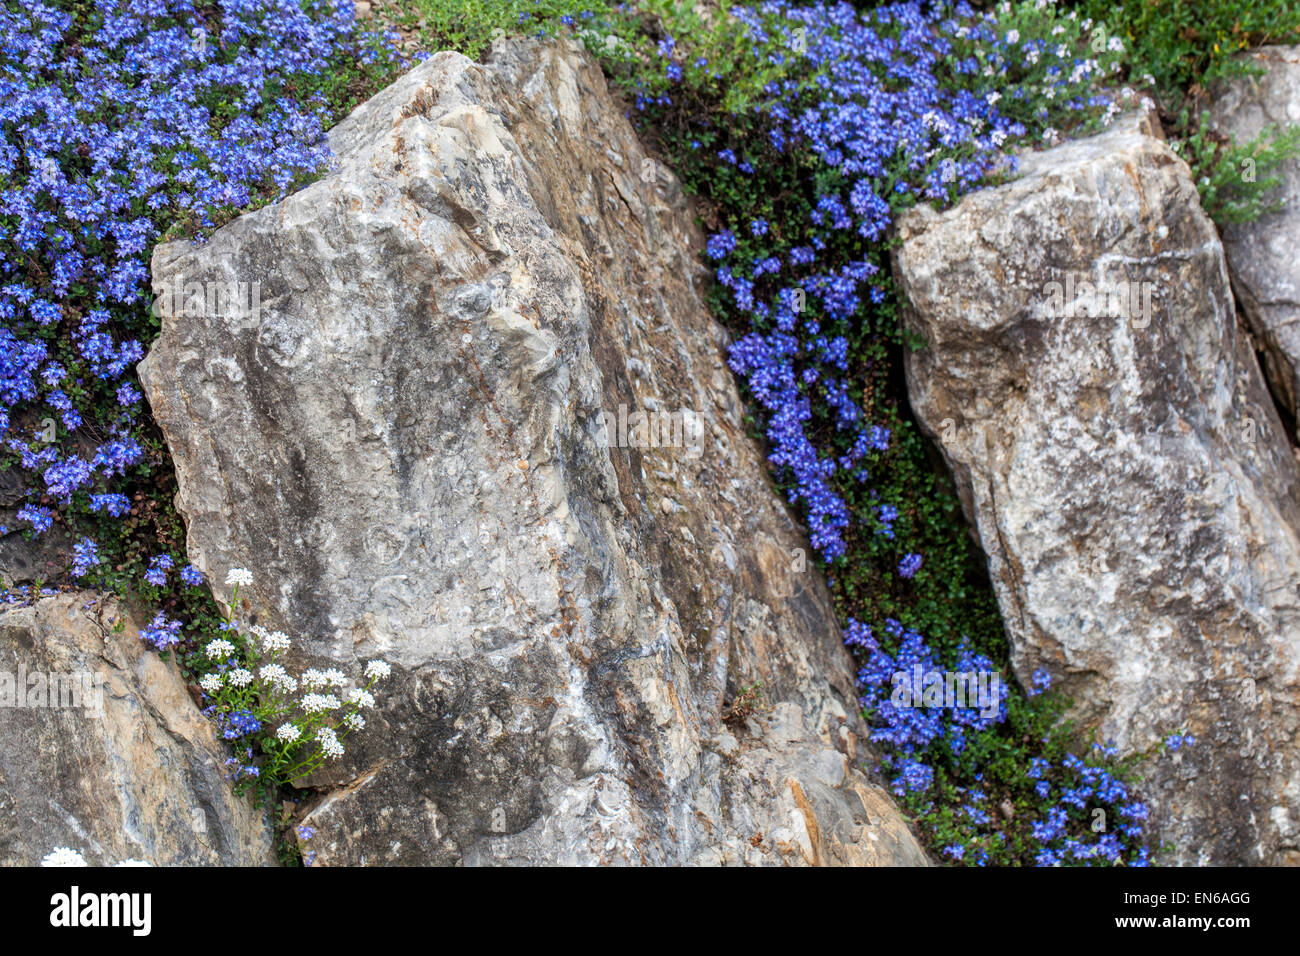 Veronica liwanesis, Iberis sempervirens, evergreen candytuft rockery garden plant growing in rock alpine plant garden Stock Photo